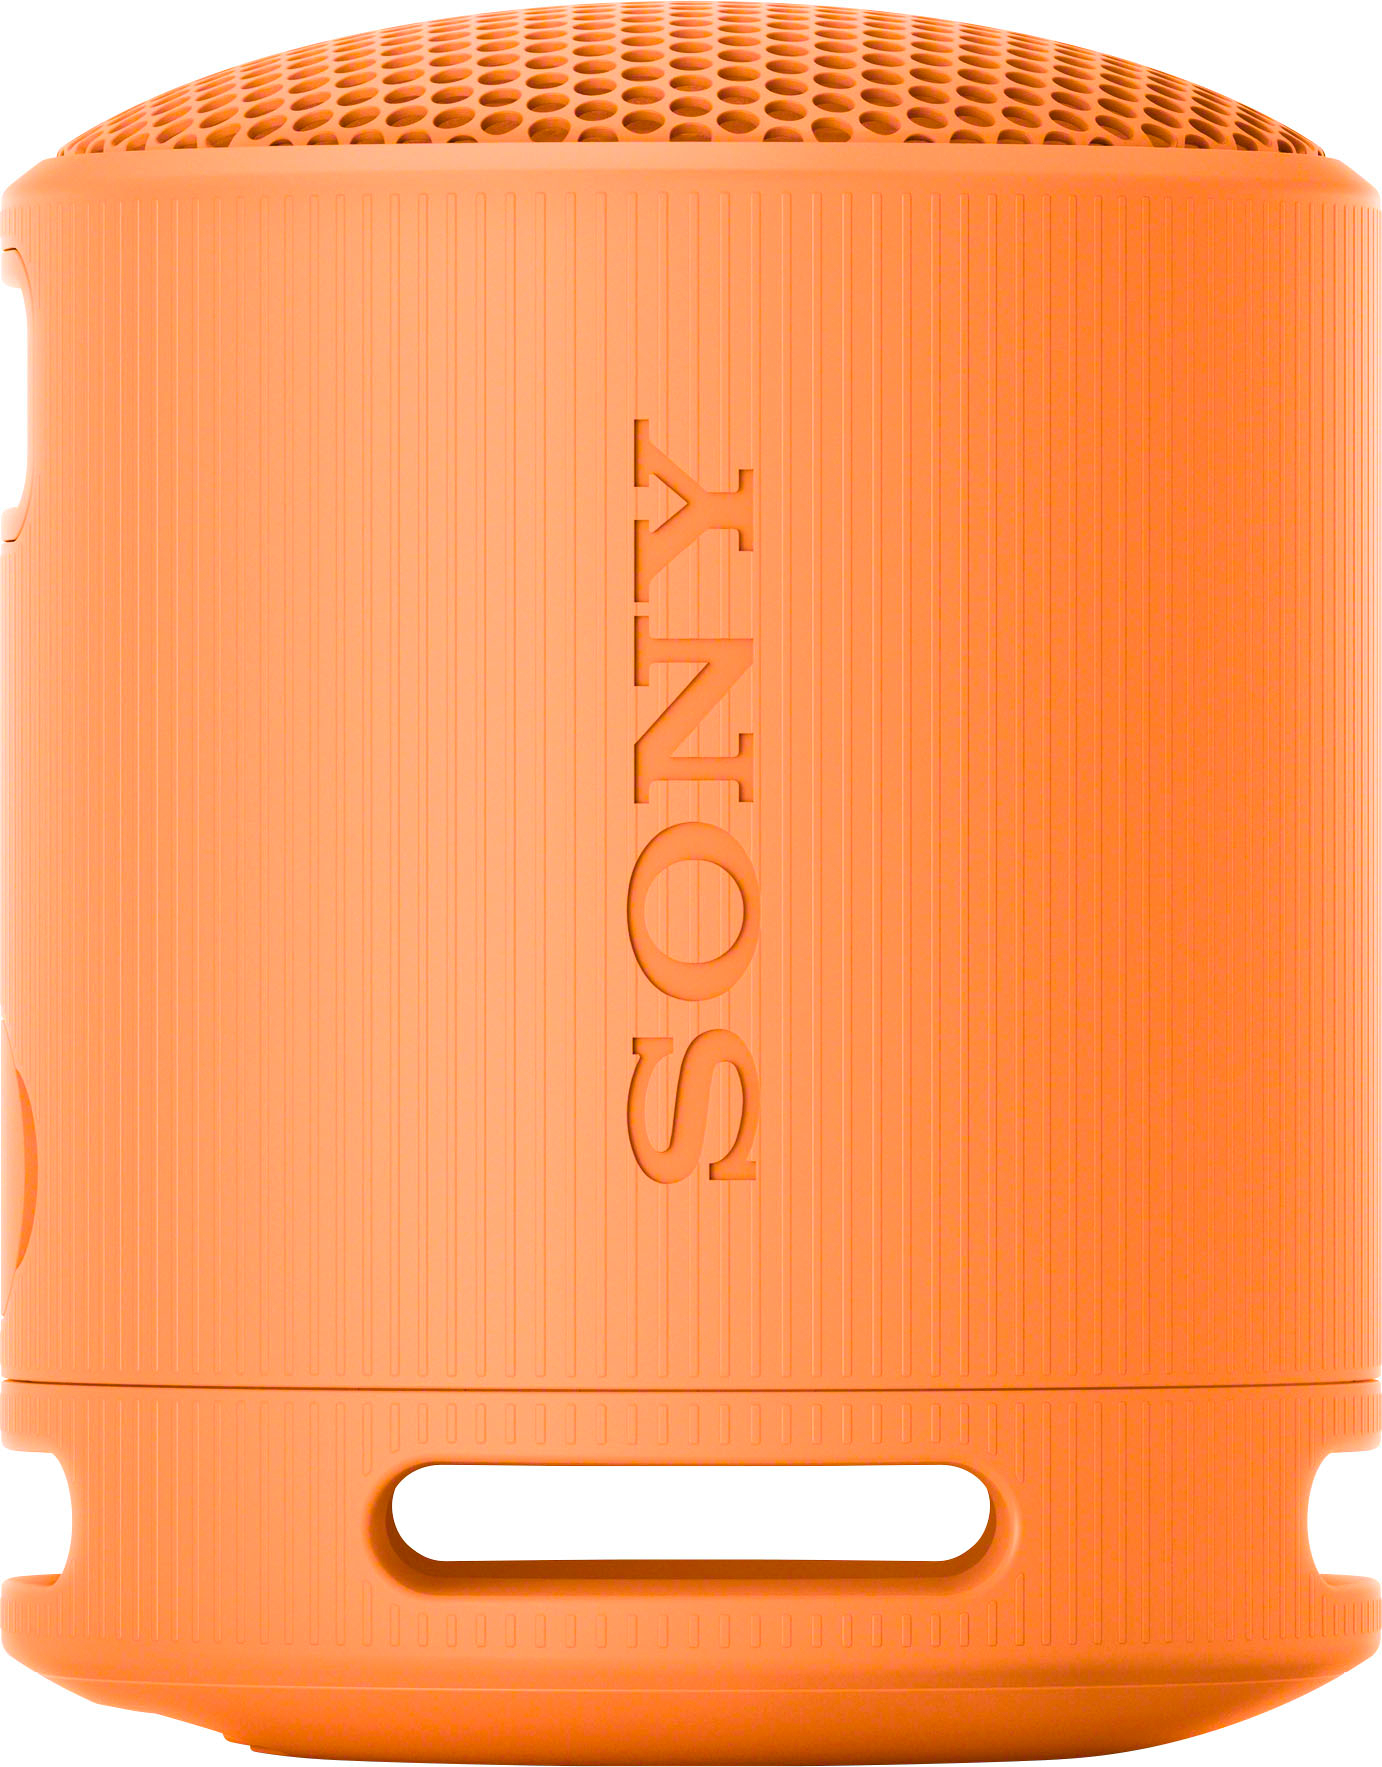 Sony XB100 Compact Bluetooth Speaker Orange SRSXB100/D - Best Buy